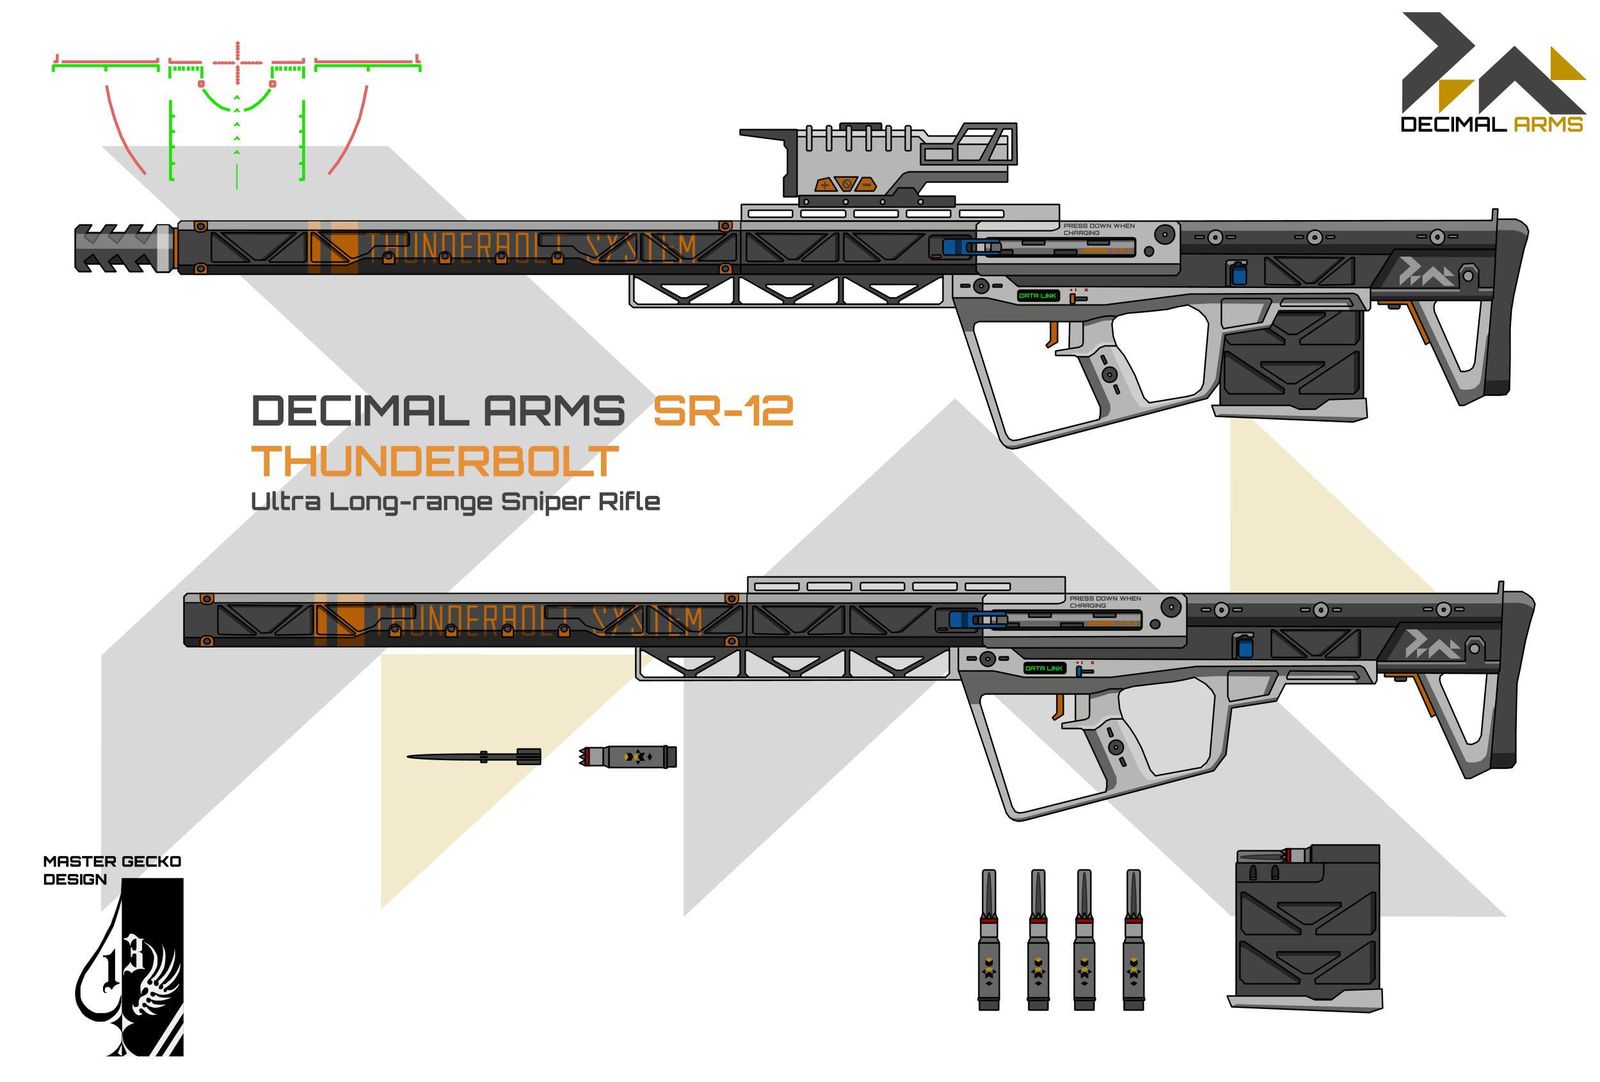 Decimal Arms SR-12